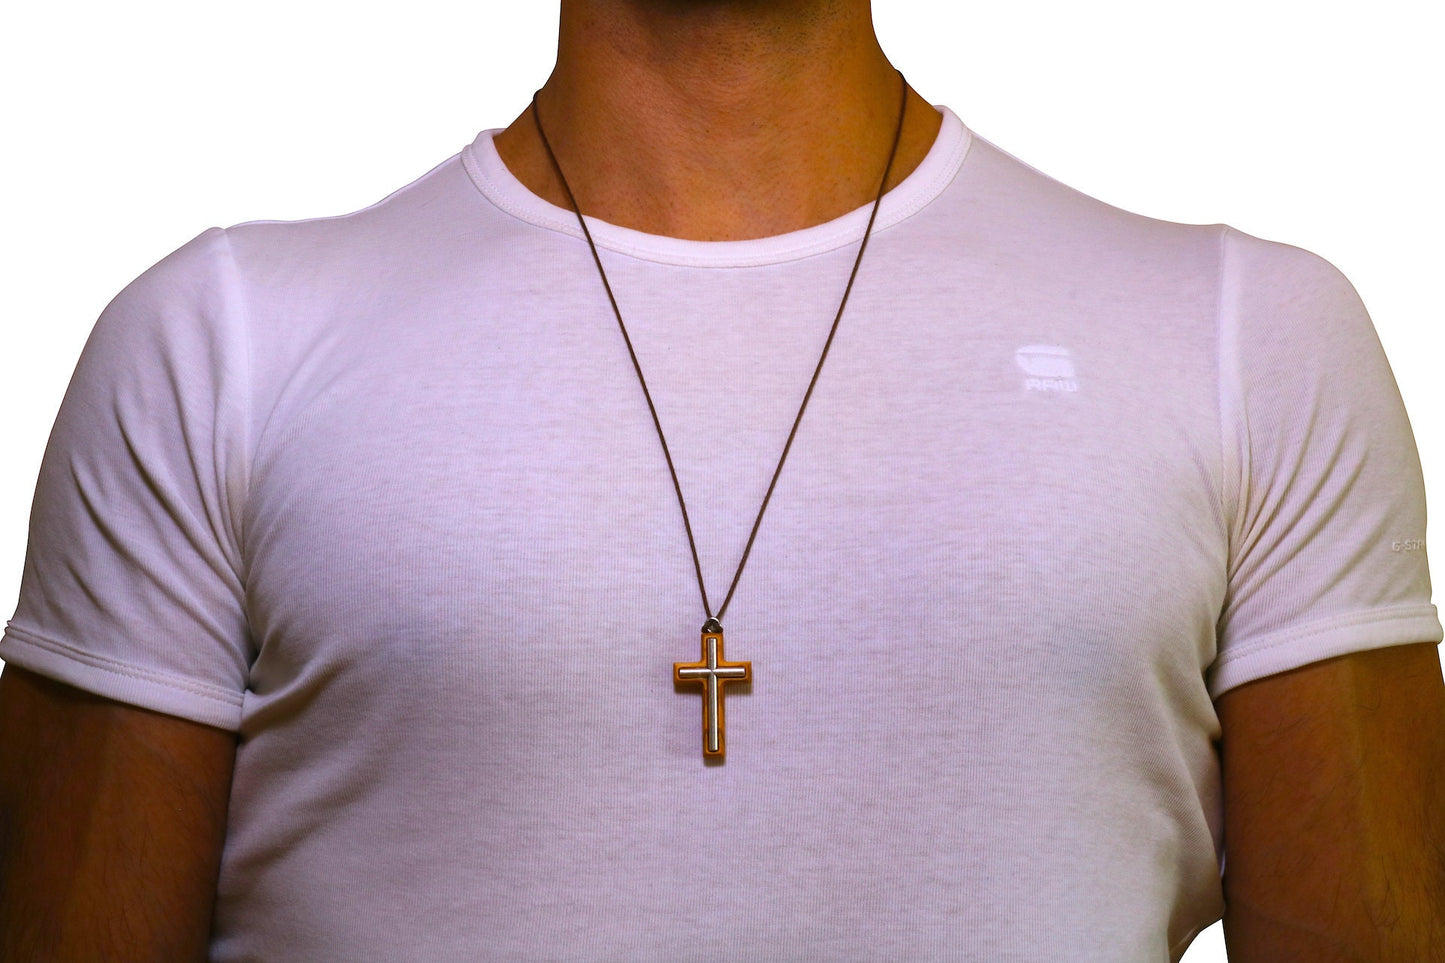 Metal cross olive wood necklace handmade in Nazareth For Men, Women, Boys & Girls